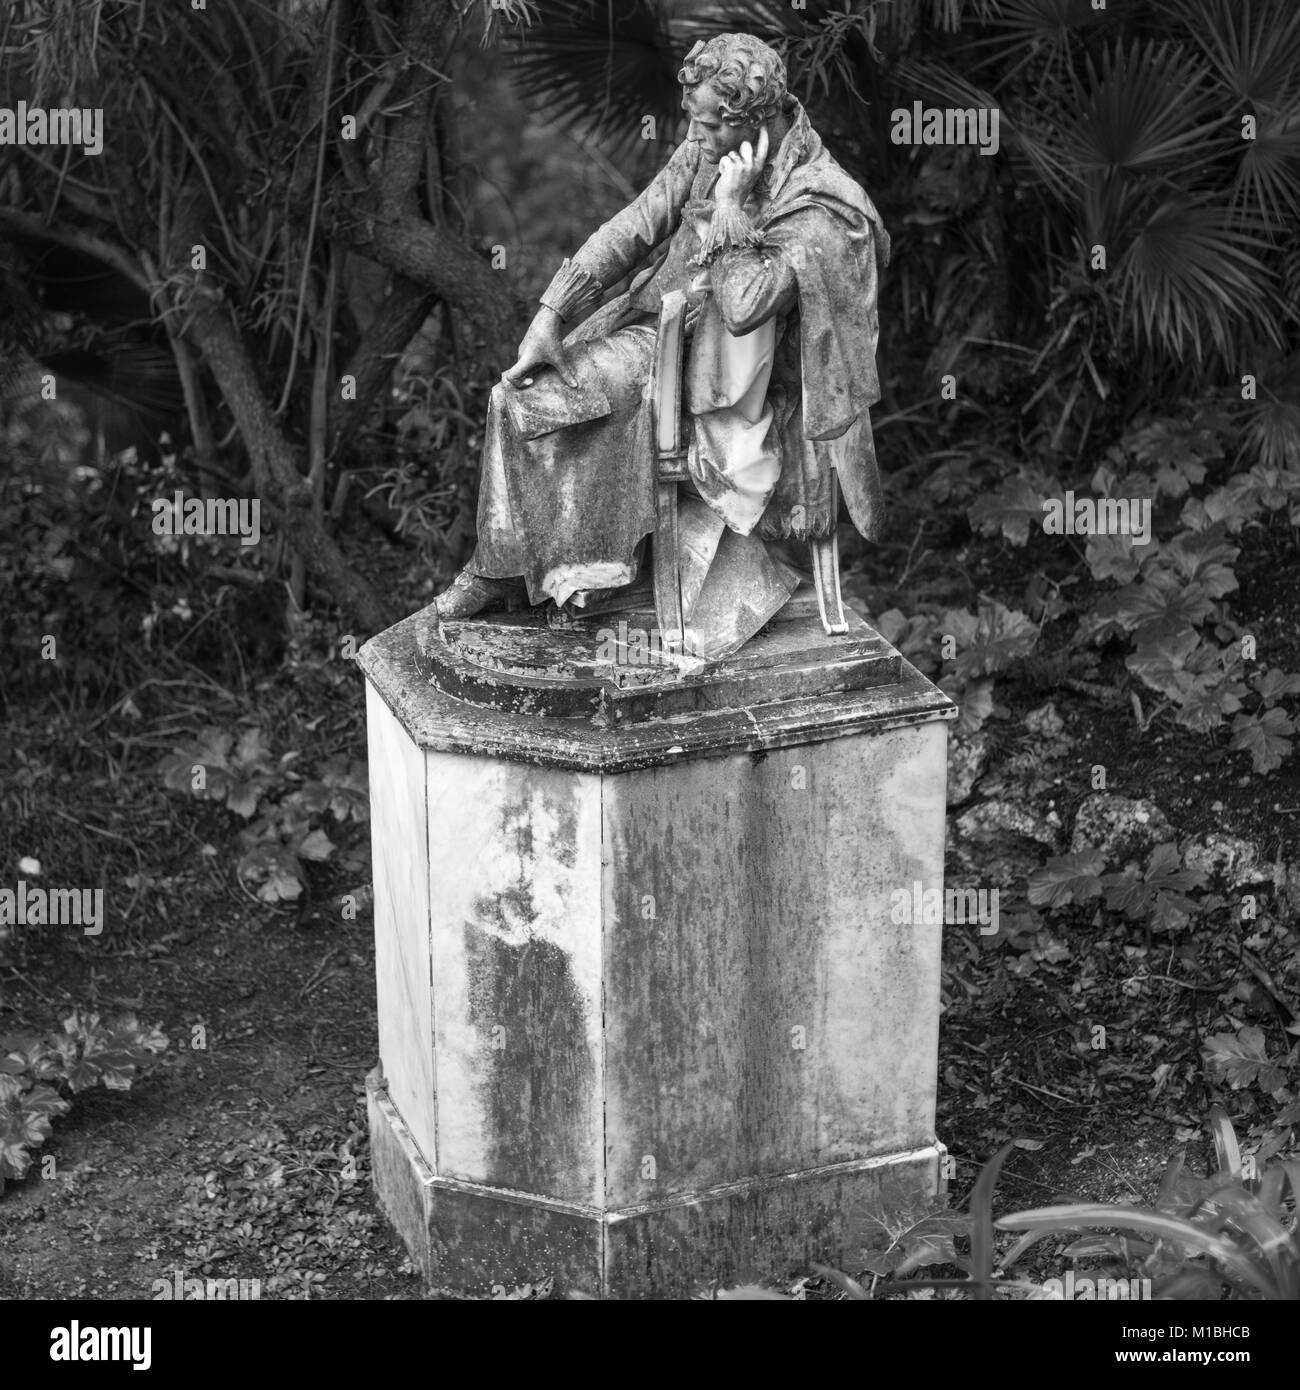 Lord Byron On A Plinth Stock Photo